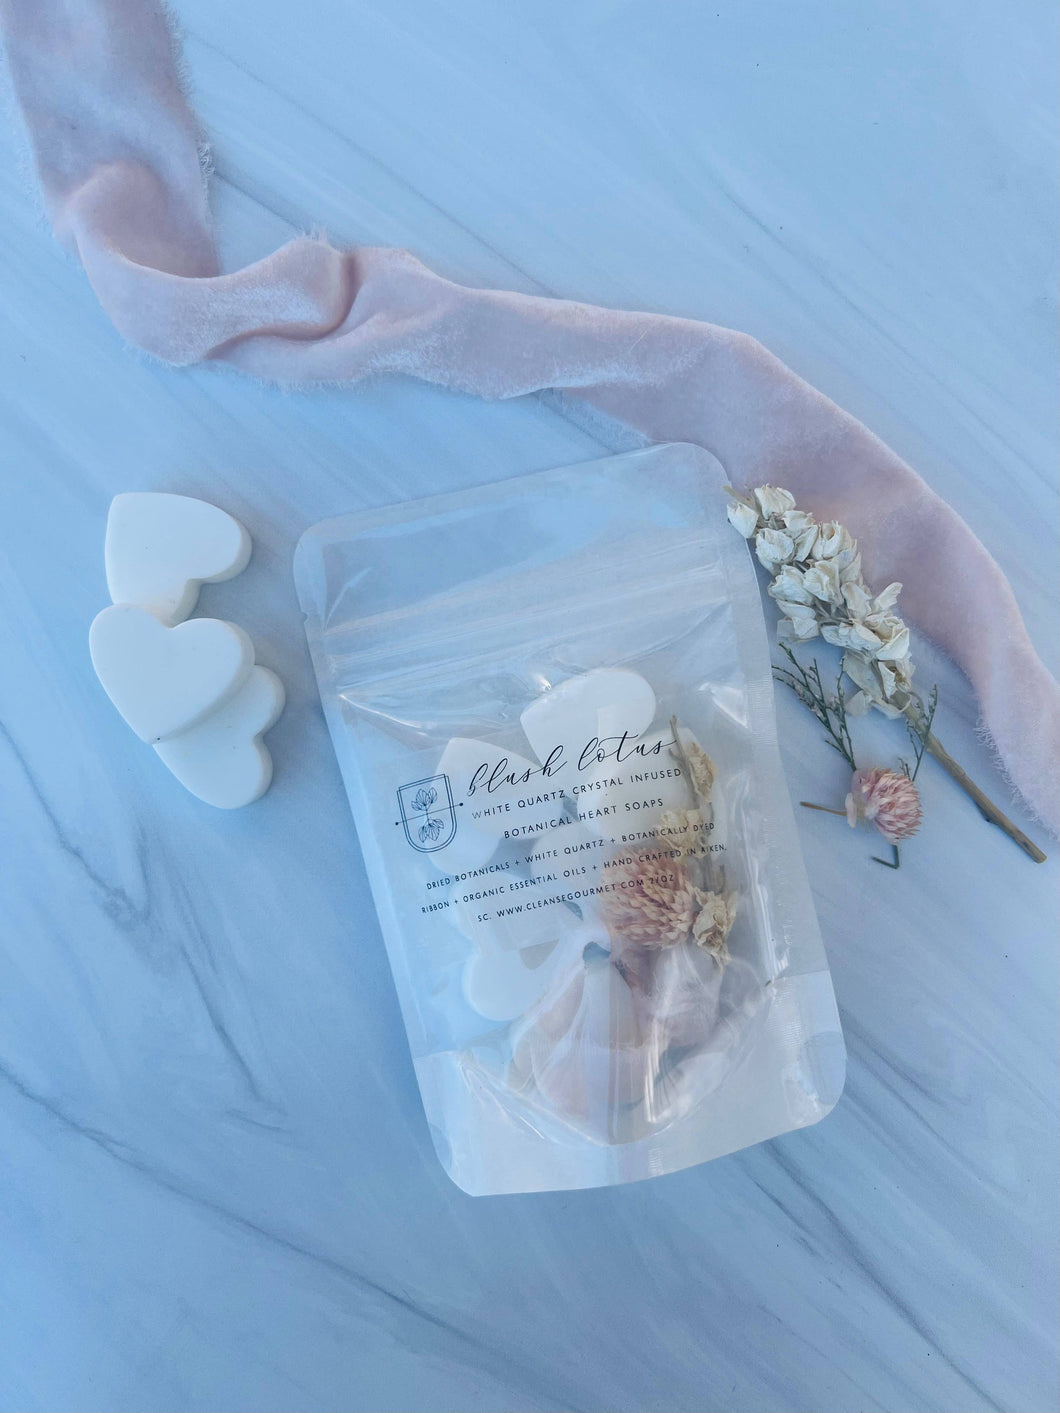 Blush Lotus crystal + botanicals infused heart hand soaps